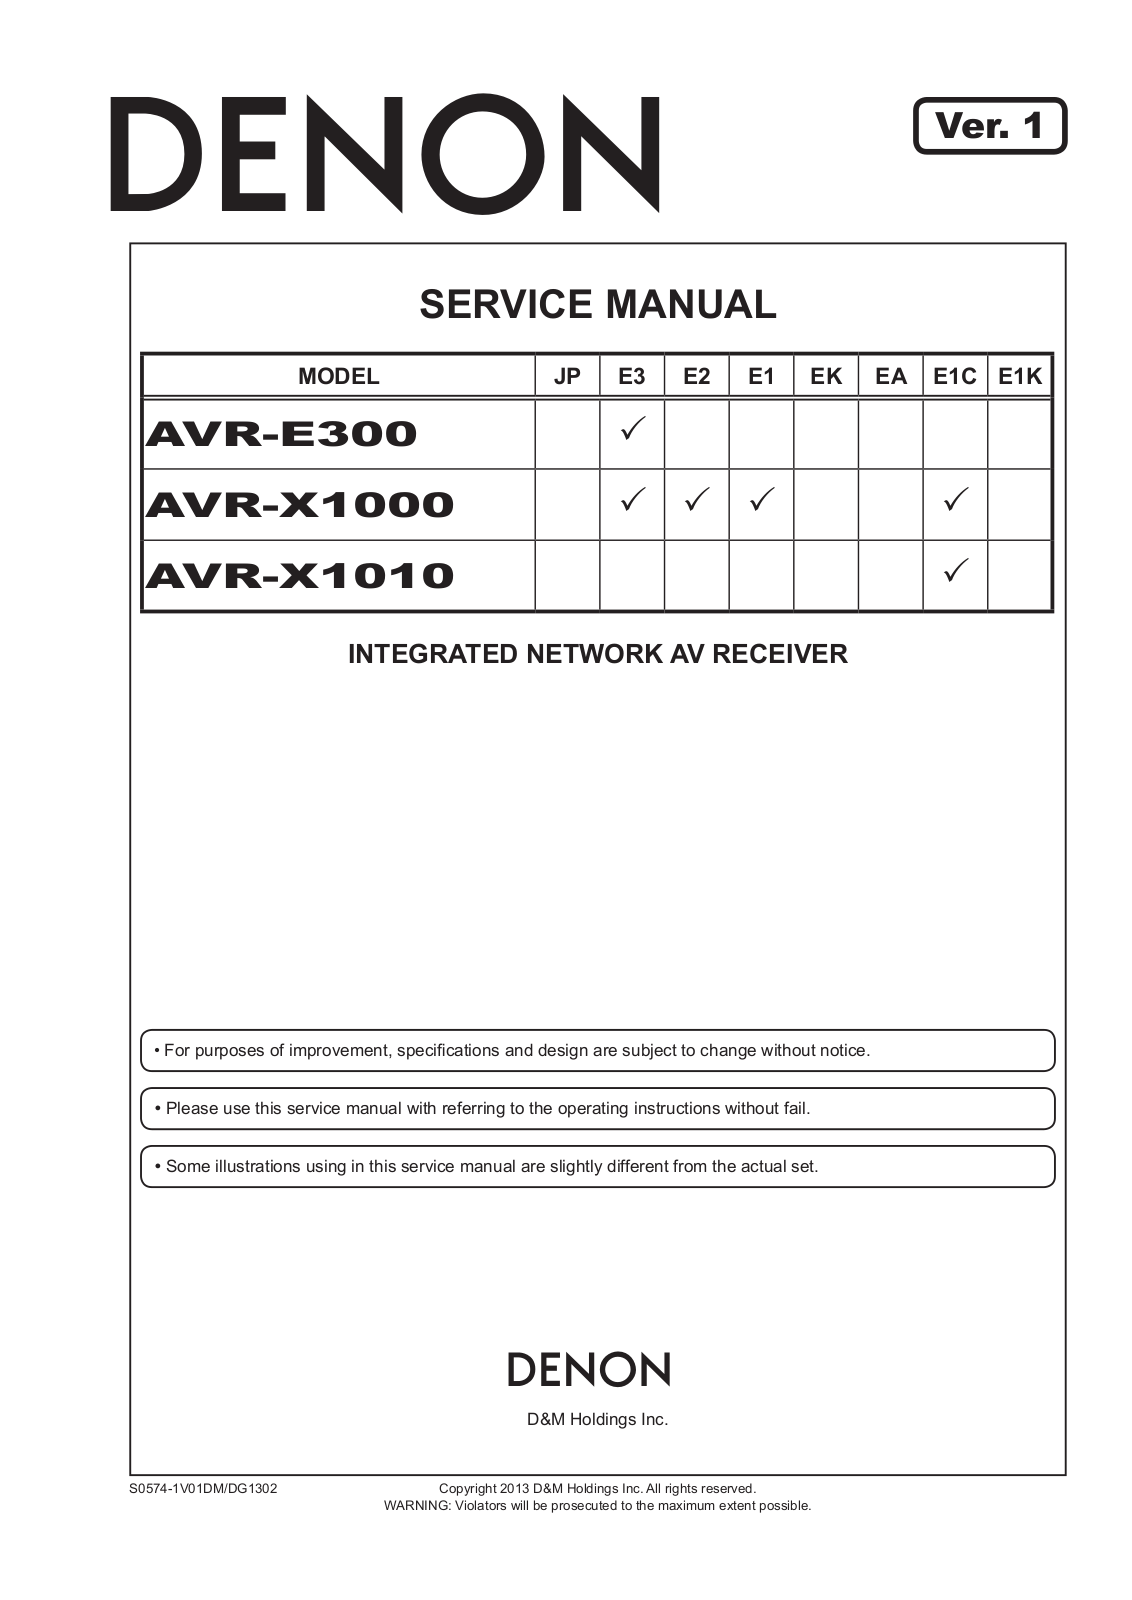 Denon AVR-E300, AVR-X1000, AVR-X1010 Service manual